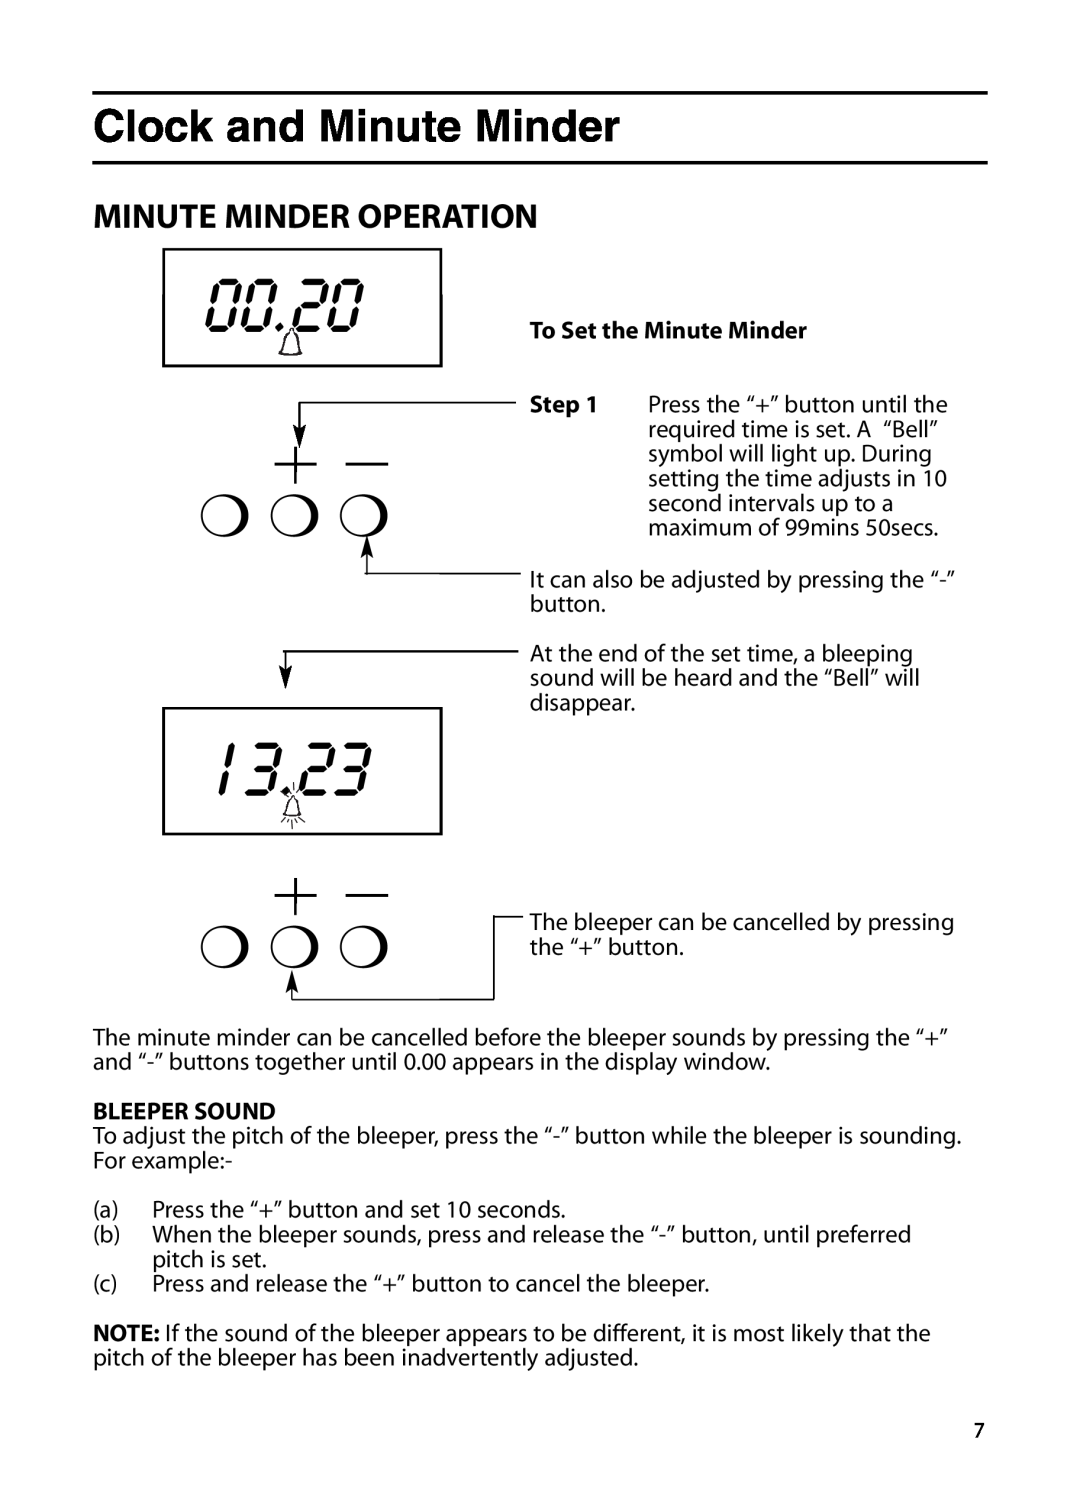 Indesit KDP60GIR 00.20, 13.23, To Set the Minute Minder, Bleeper Sound, Clock and Minute Minder, Minute Minder Operation 